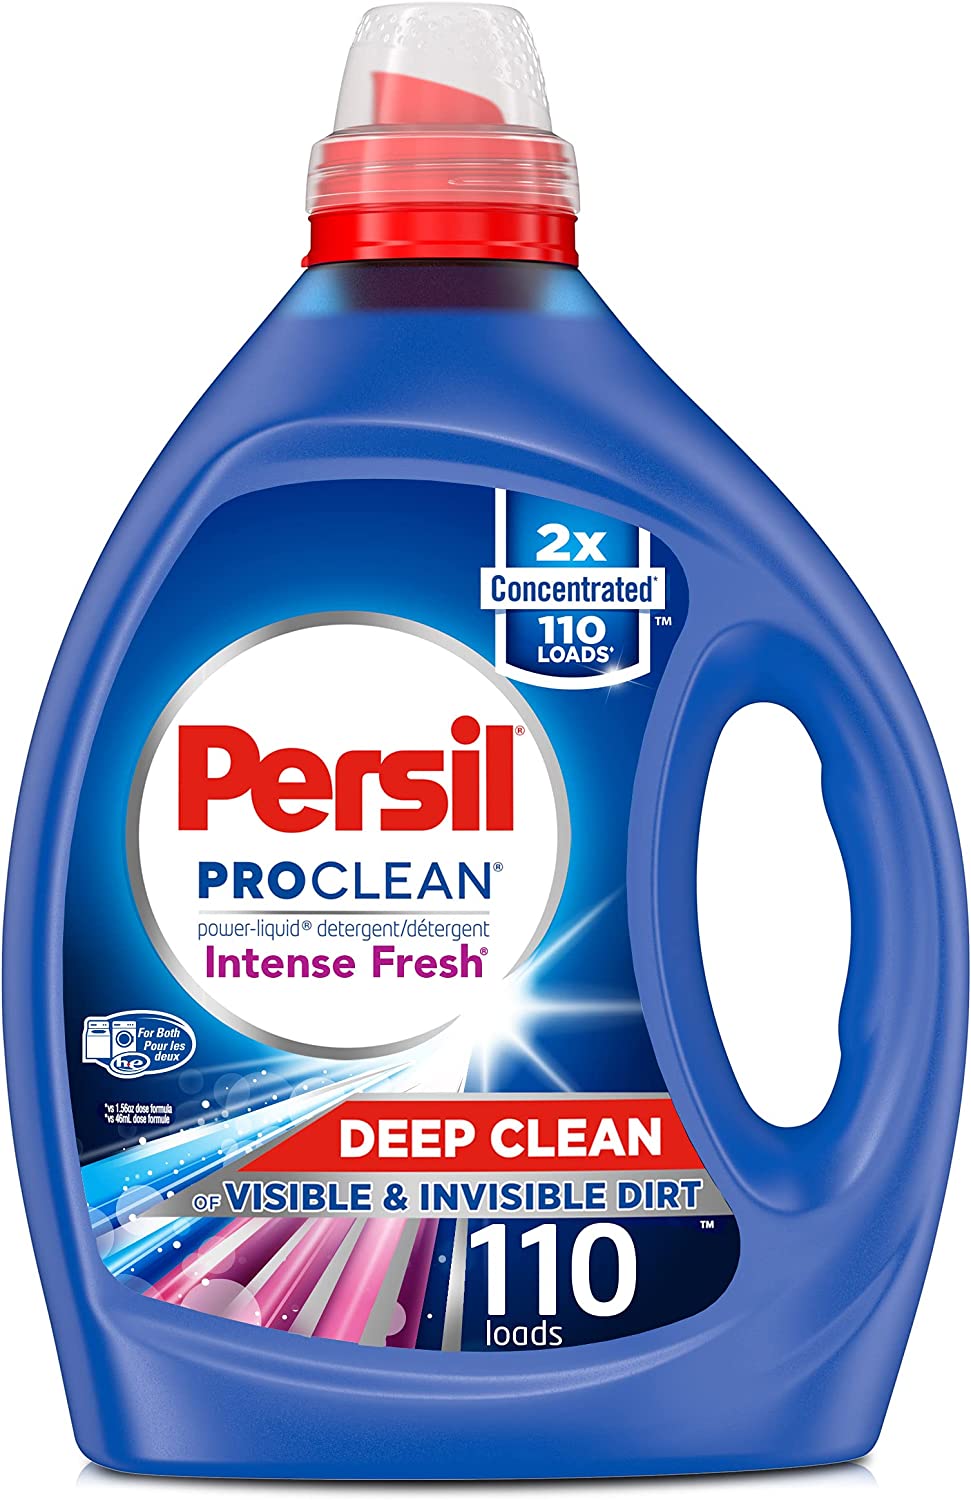 Persil Liquid Detergent ProClean Intense Fresh-2